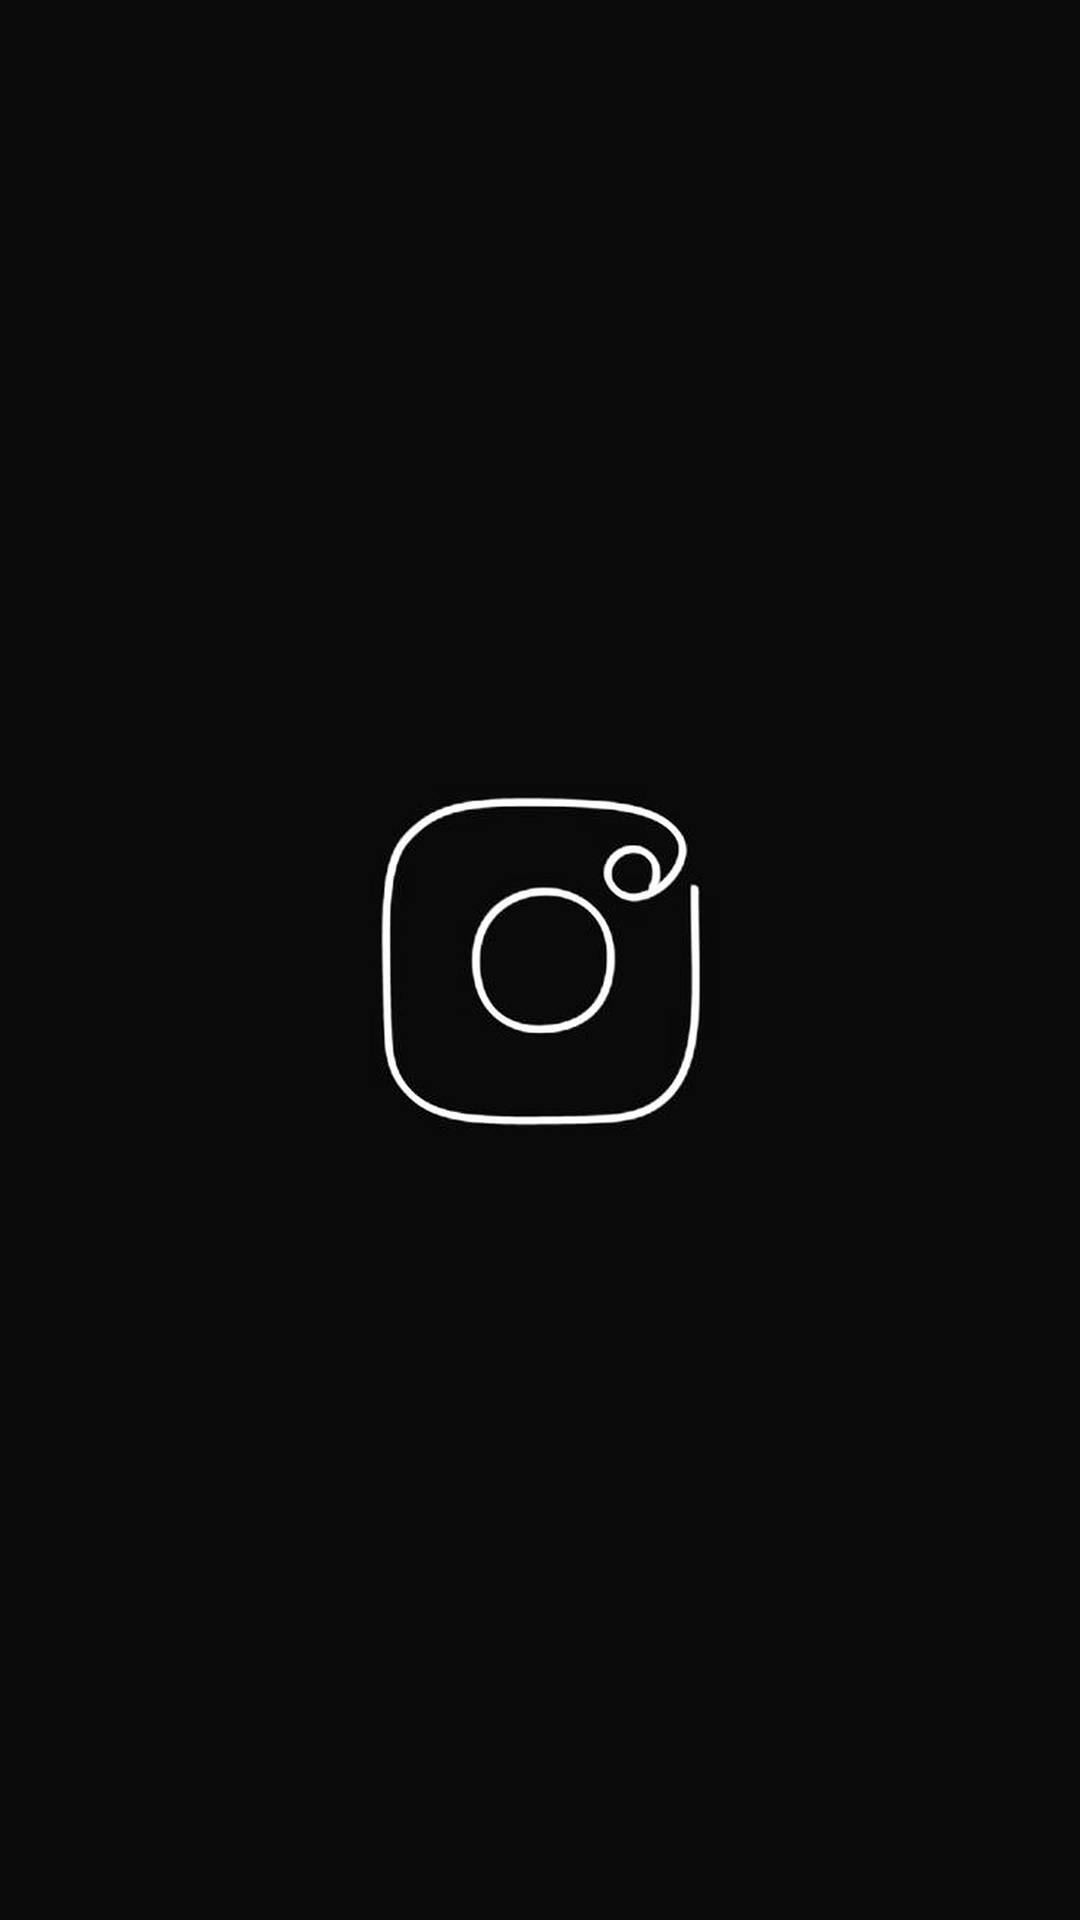 Schwarzesminimalistisches Instagram-symbol Wallpaper